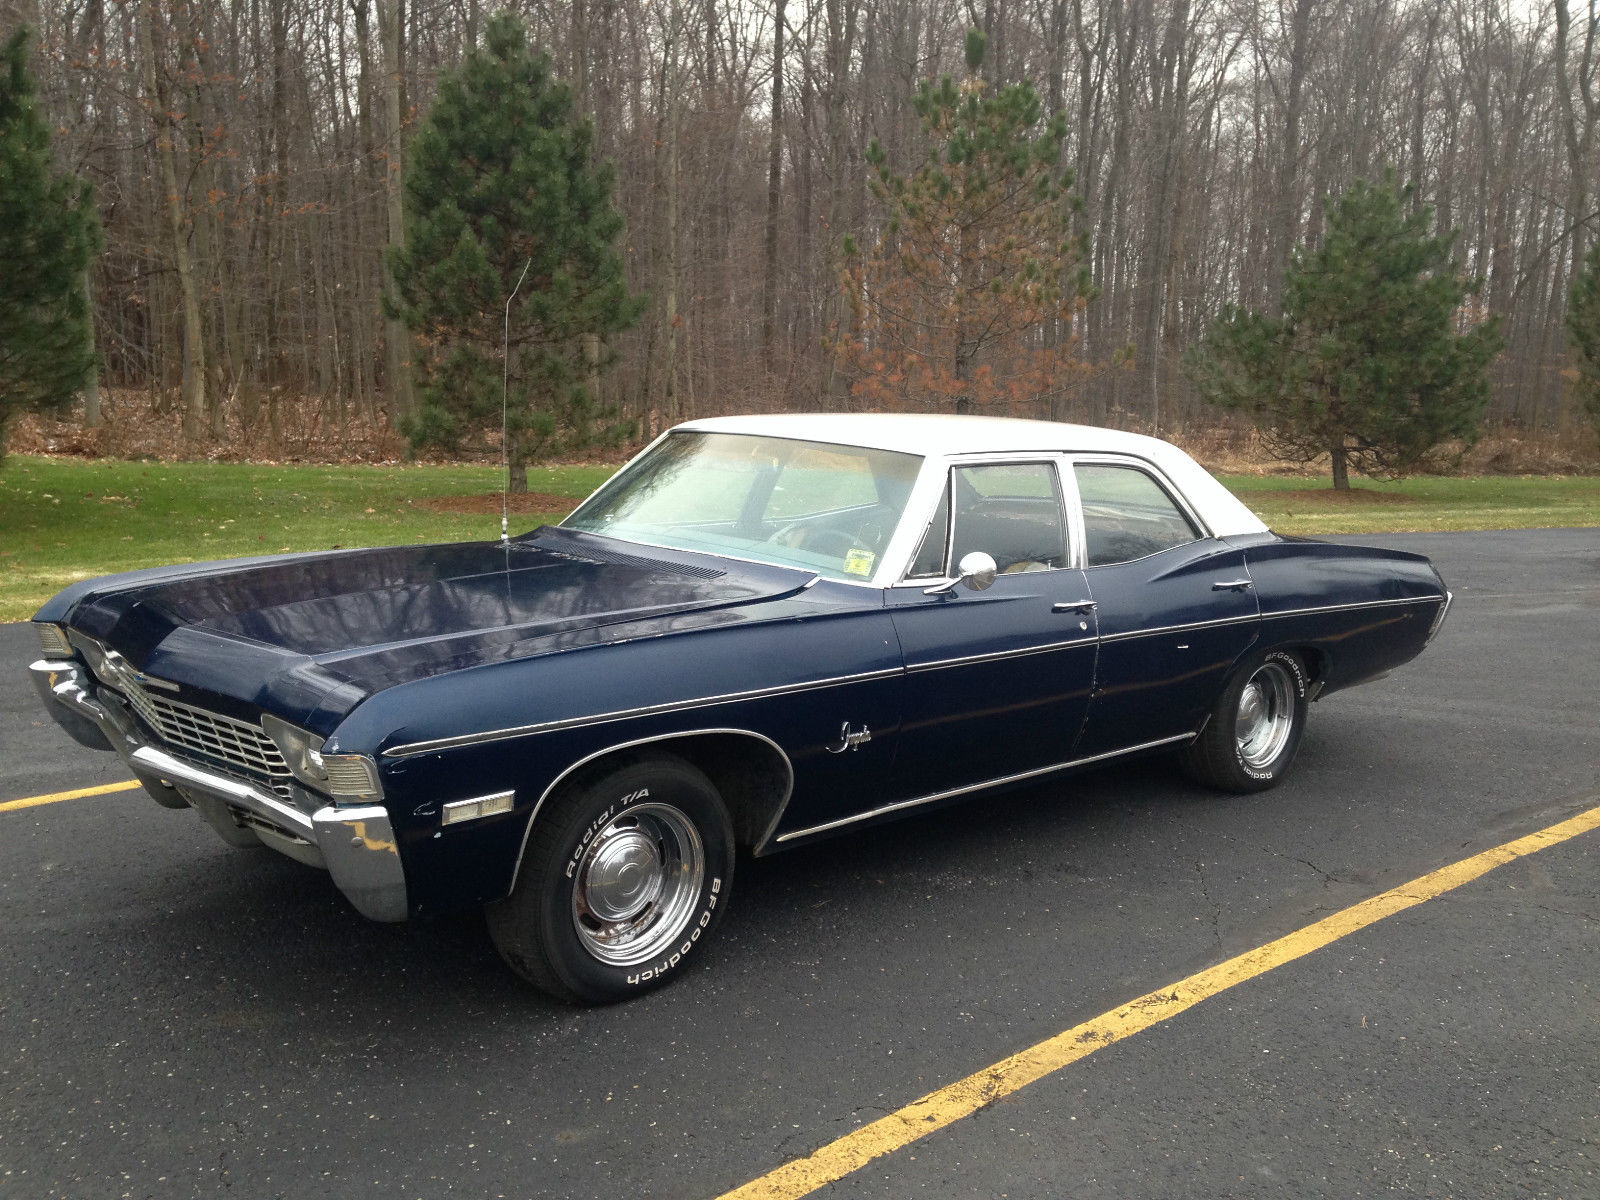 68 CHEVEROLET IMPALA, LIKE 1967 ~4 door ~SUPERNATURAL CAR ...
 1967 Chevy Impala Supernatural